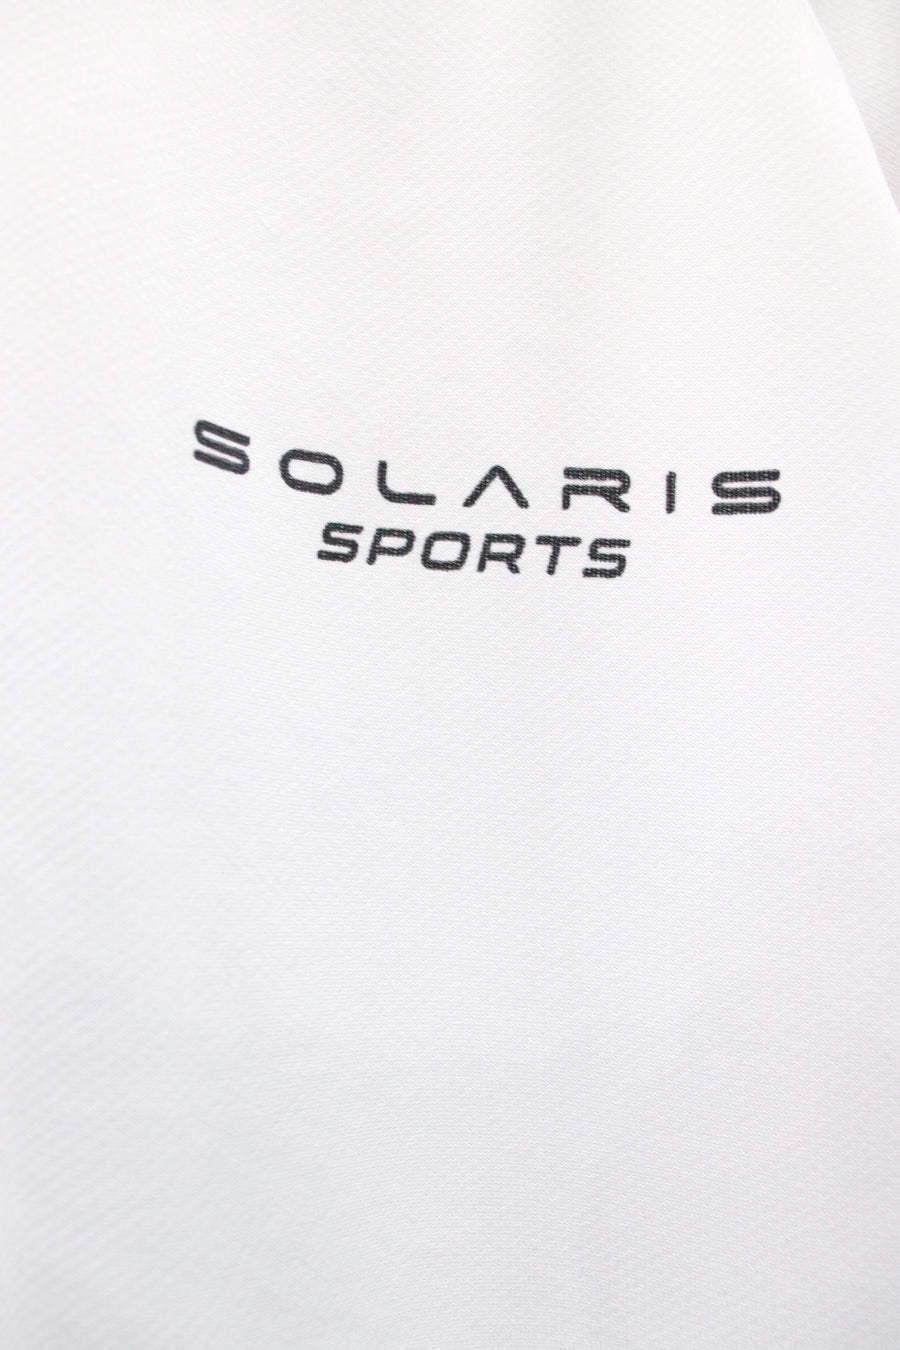 SOLARIS SPORTS  S/S FOOTBALL SHIRT